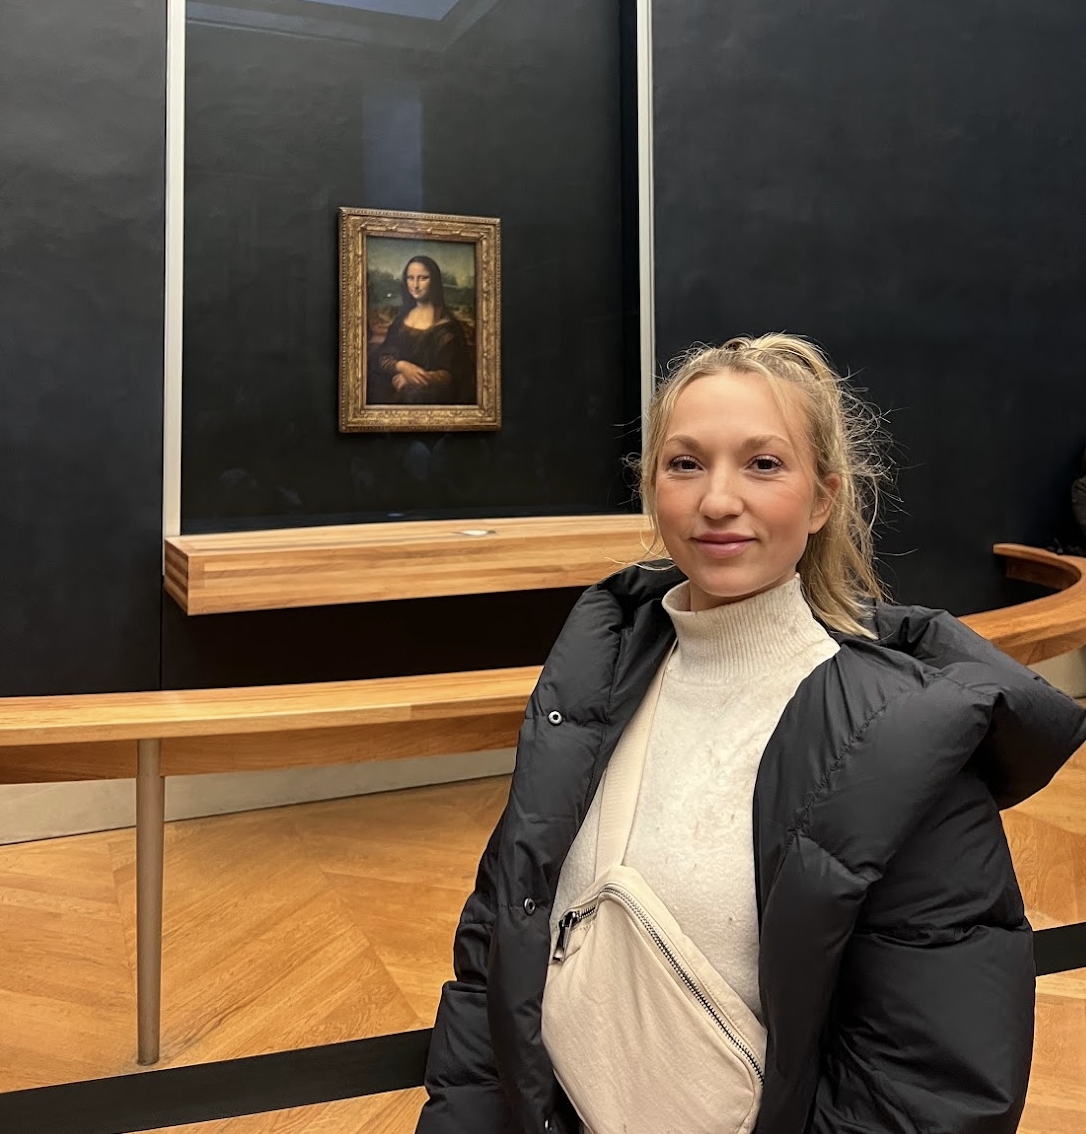 Mona Lisa Louvre Museum